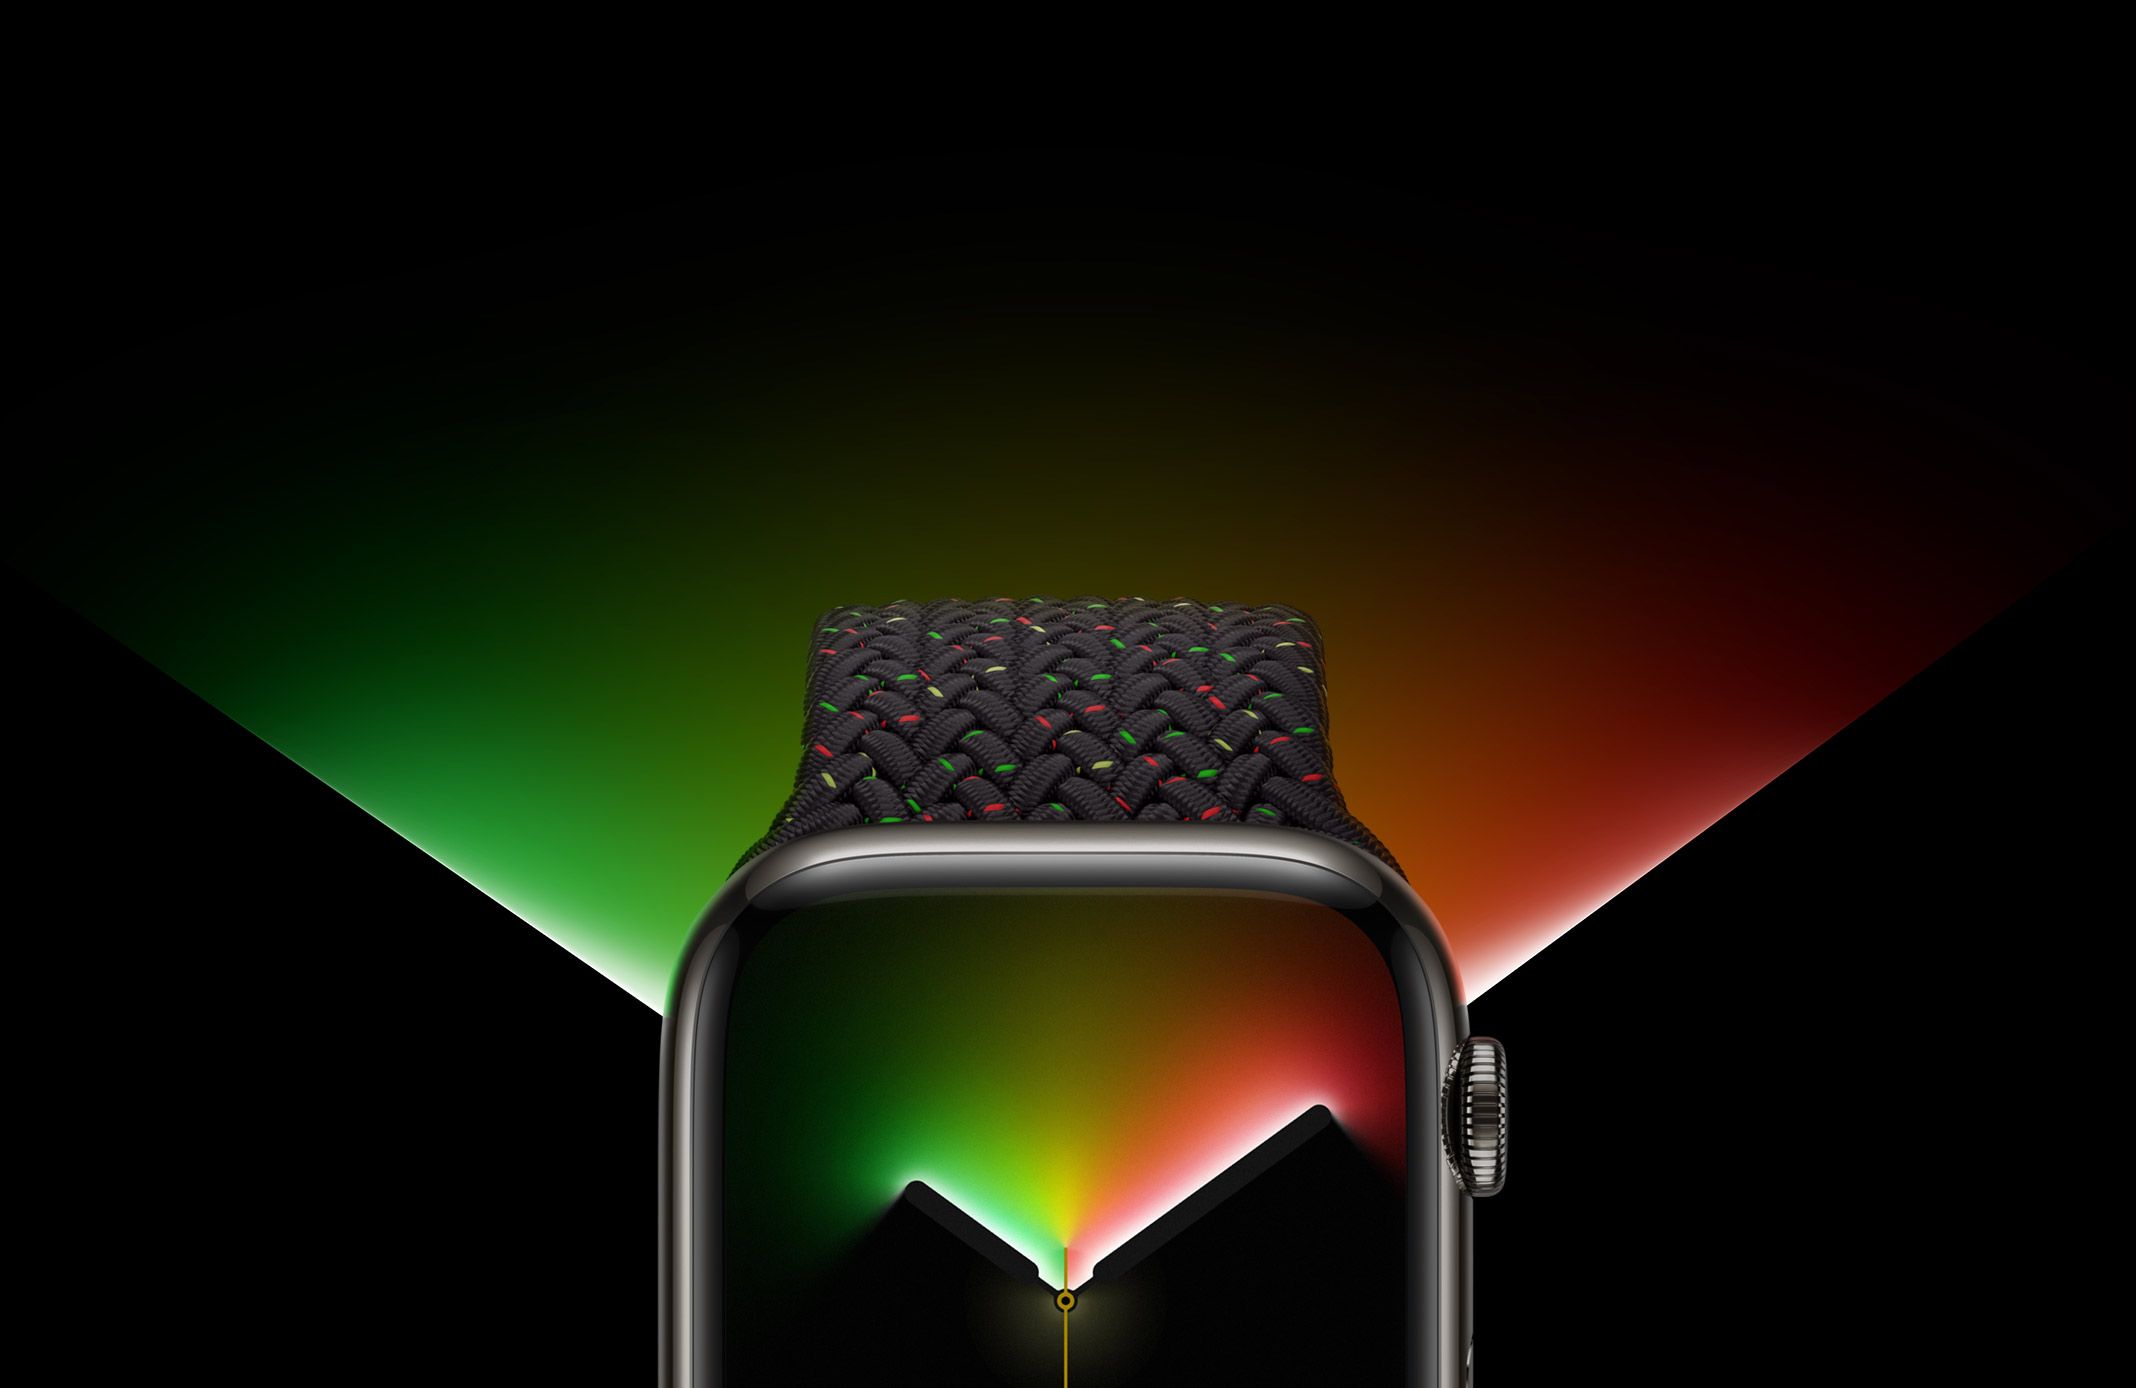 Conhece a pulseira de edição limitada Black Unity Braided Solo Loop para Apple Watch!